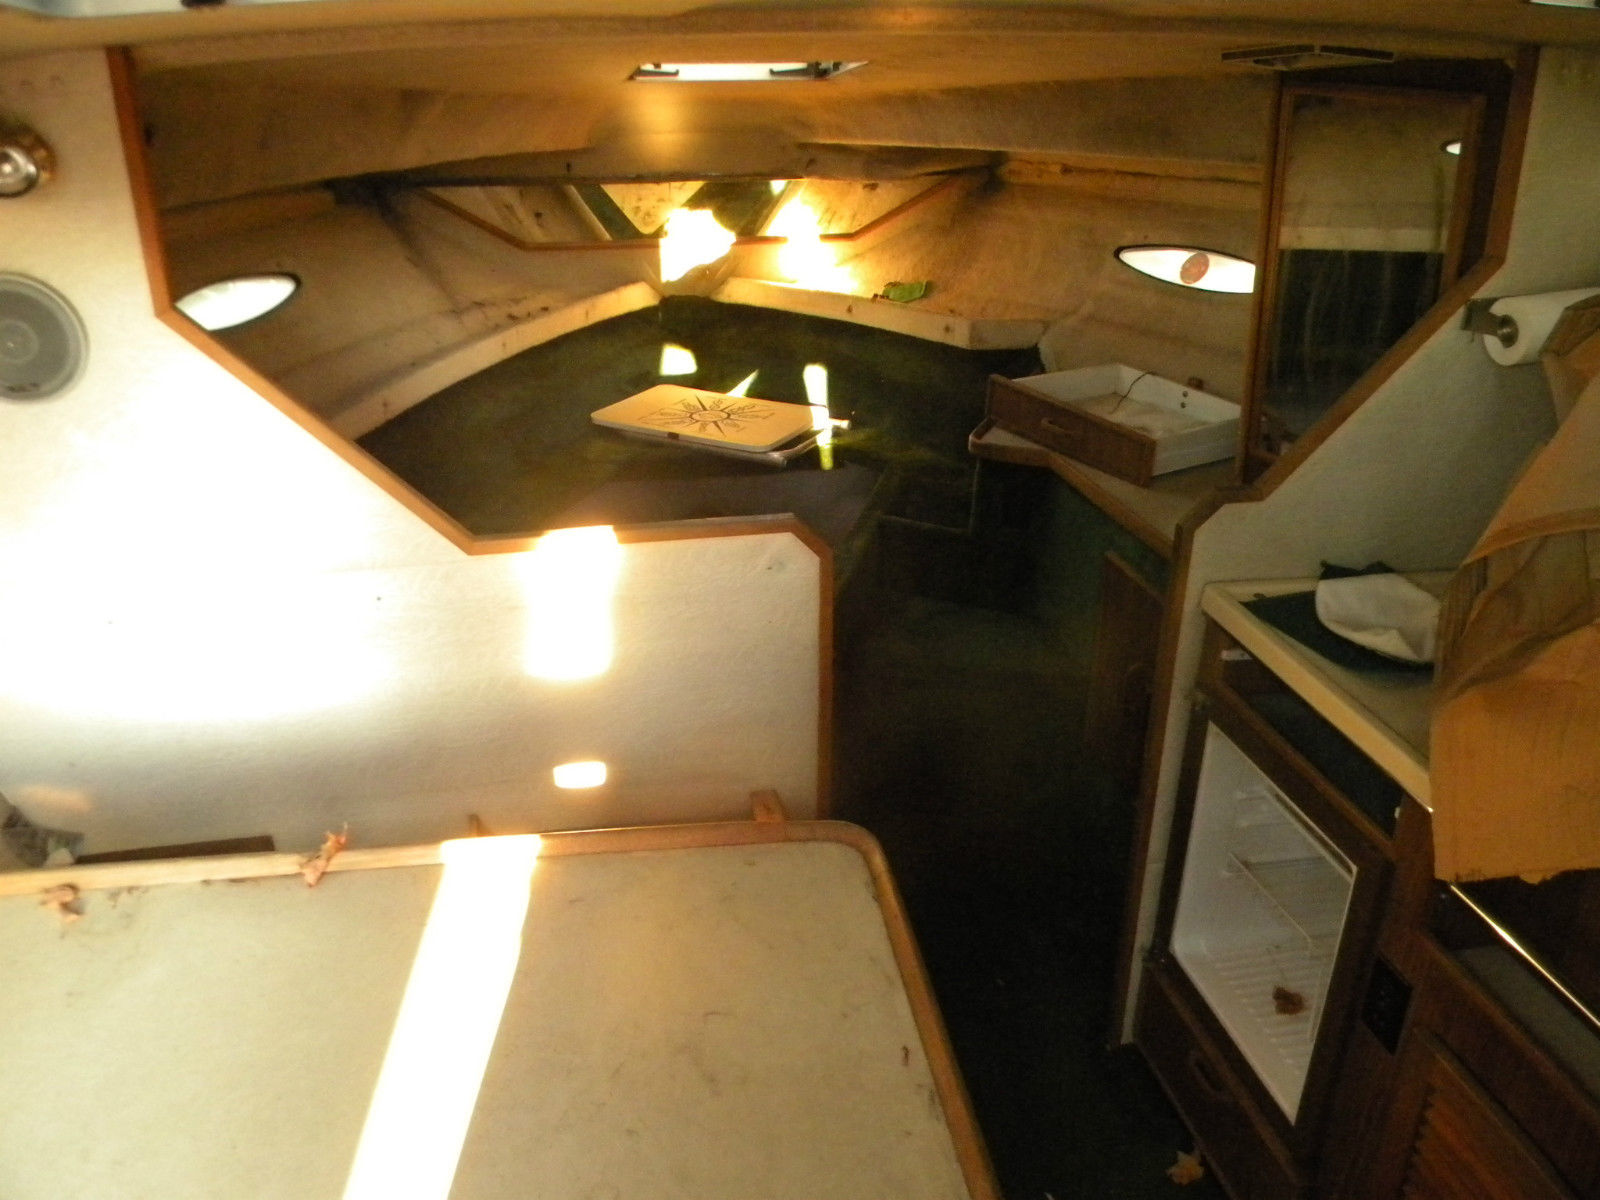 Sea Ray Sundancer interior condition